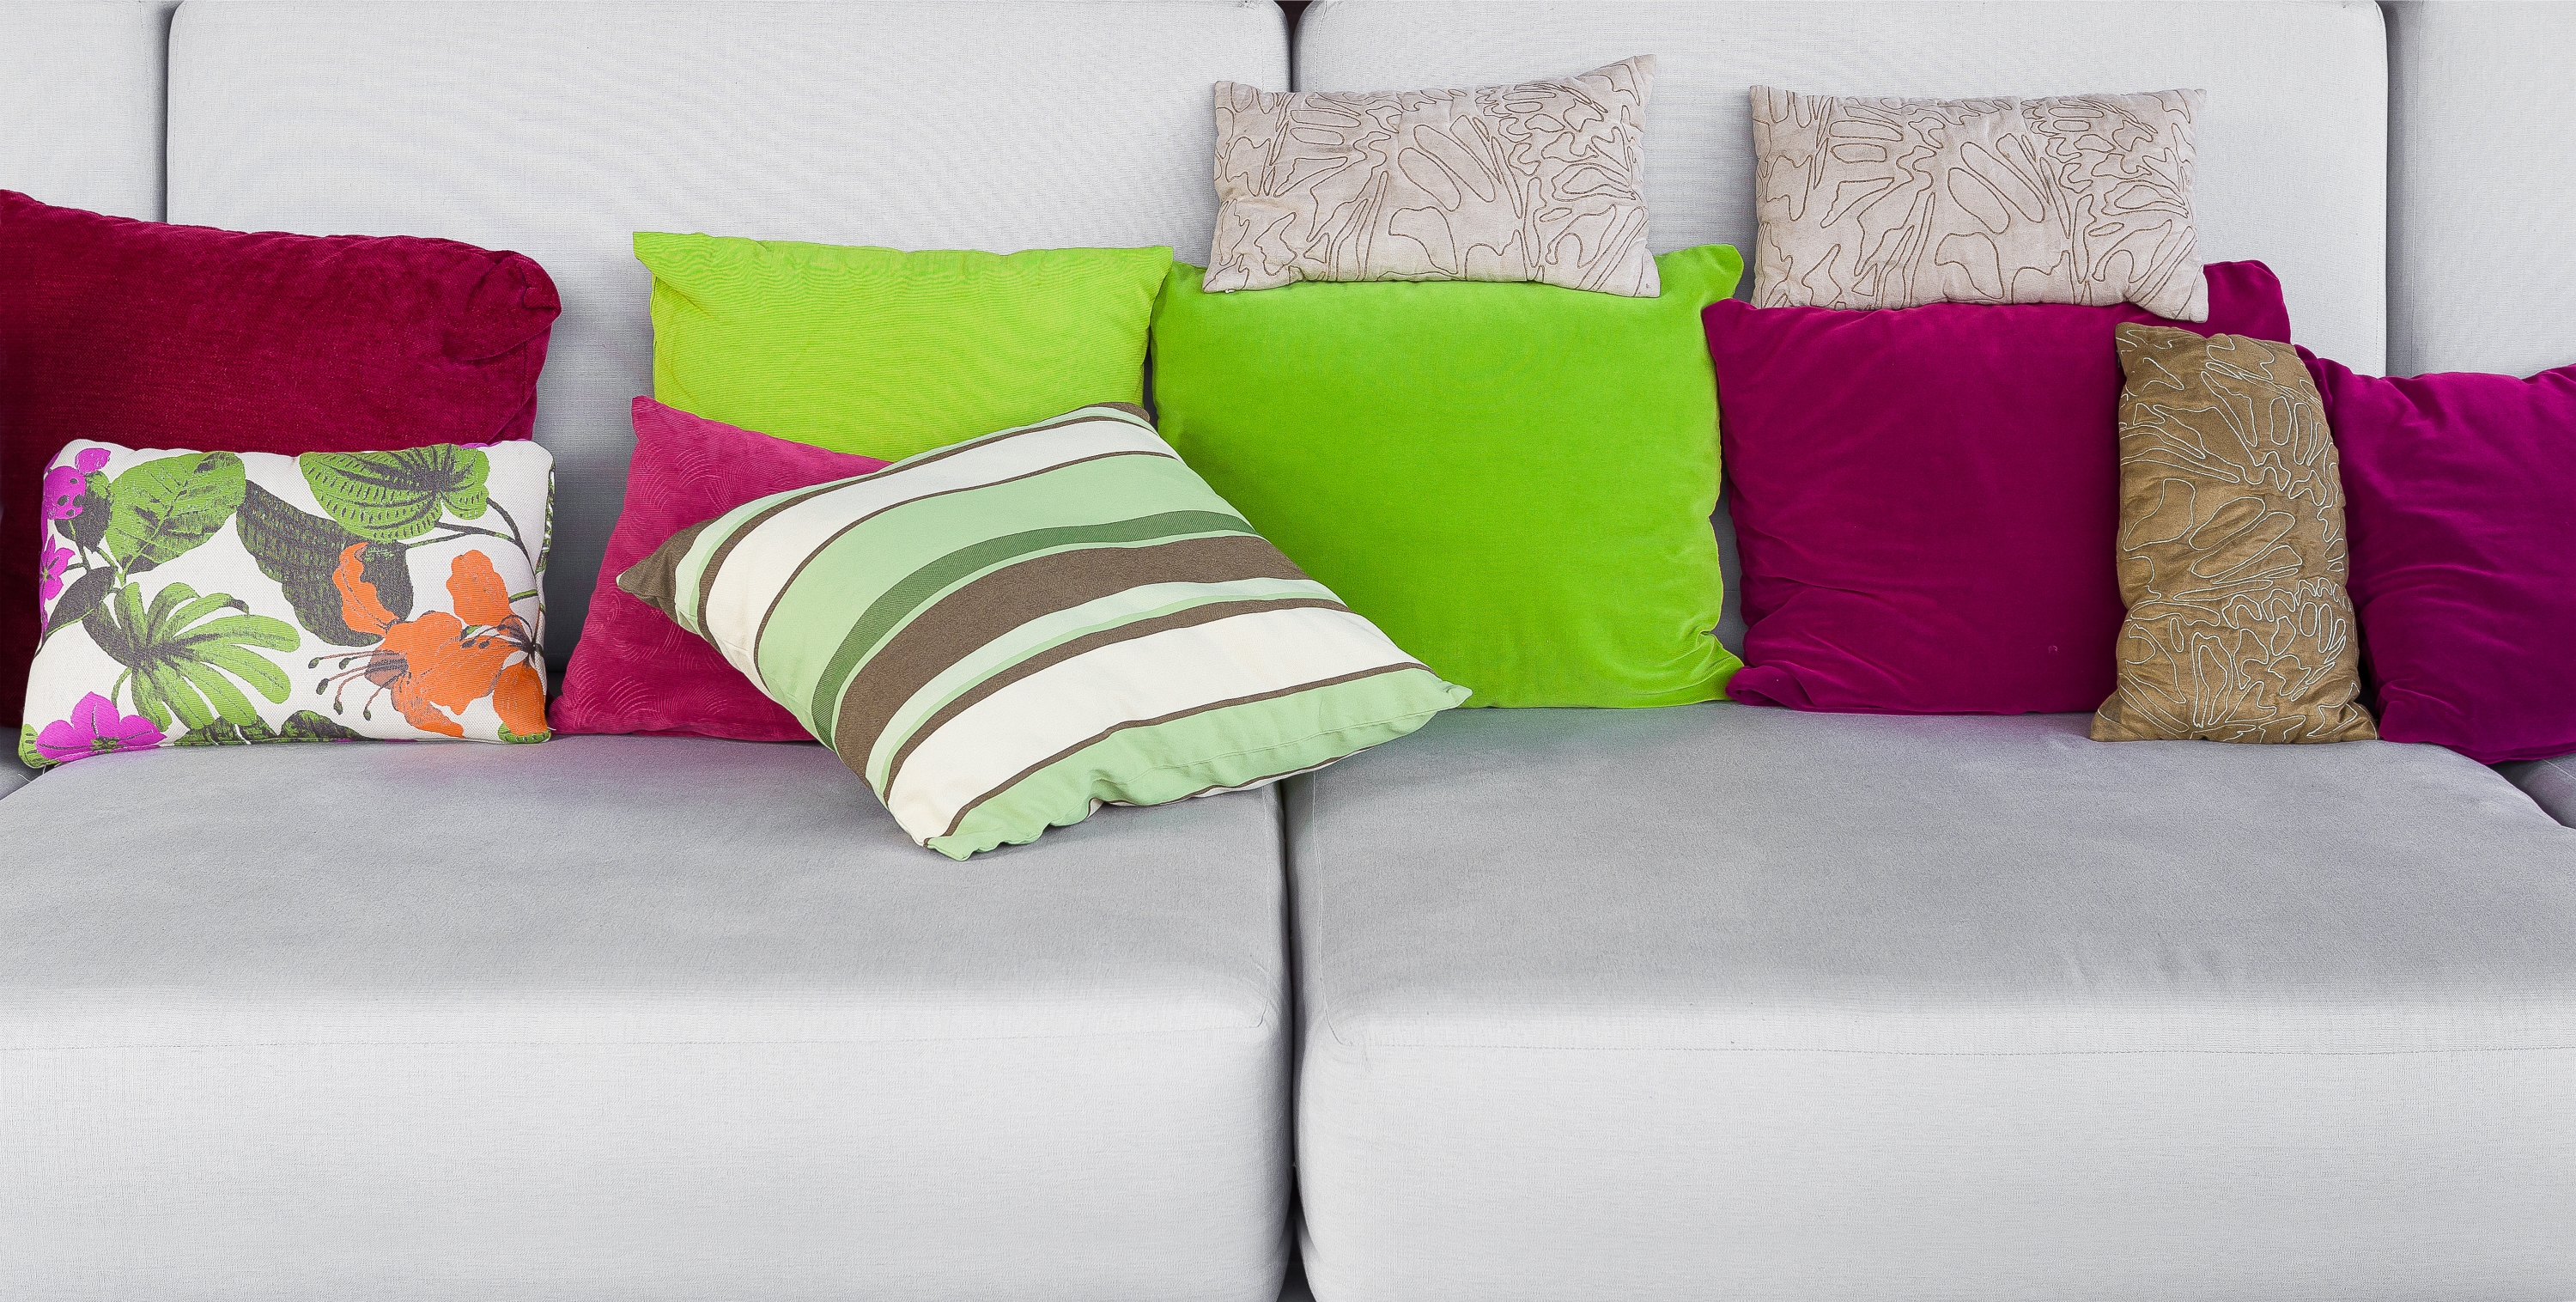 No-Fail Recipes for Artfully Arranging Your Sofa Pillows